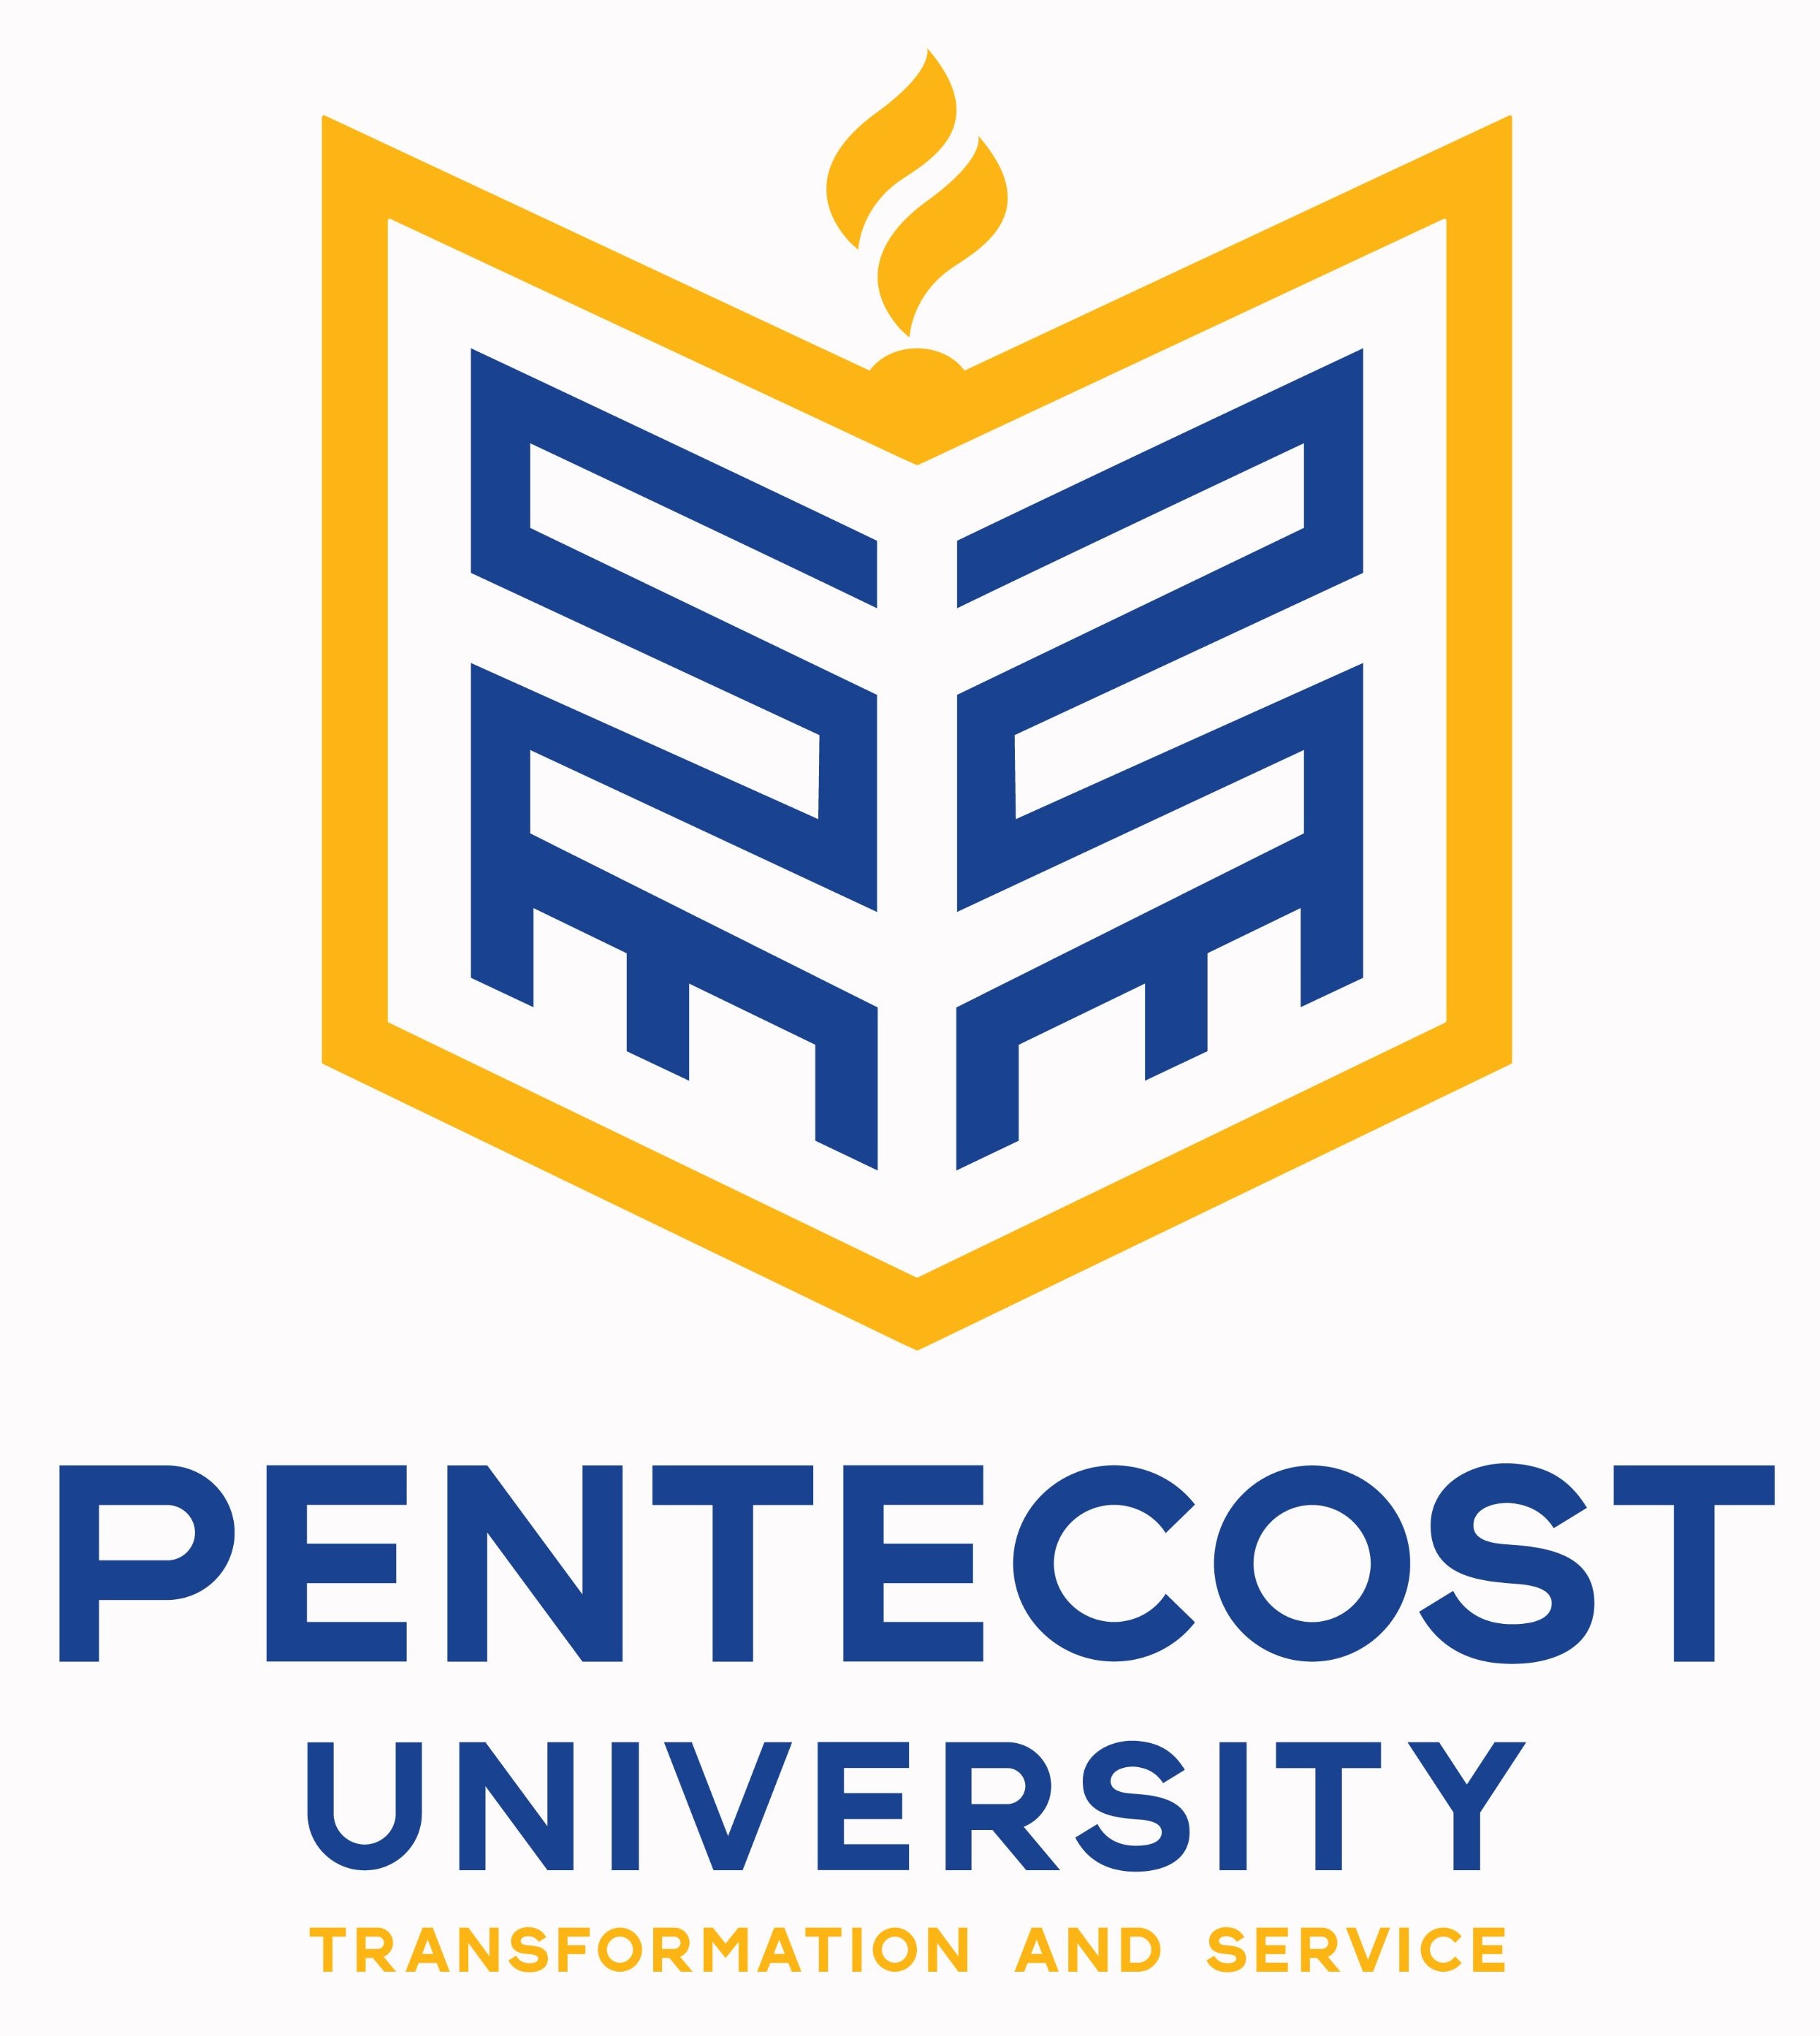 The Pentecost University